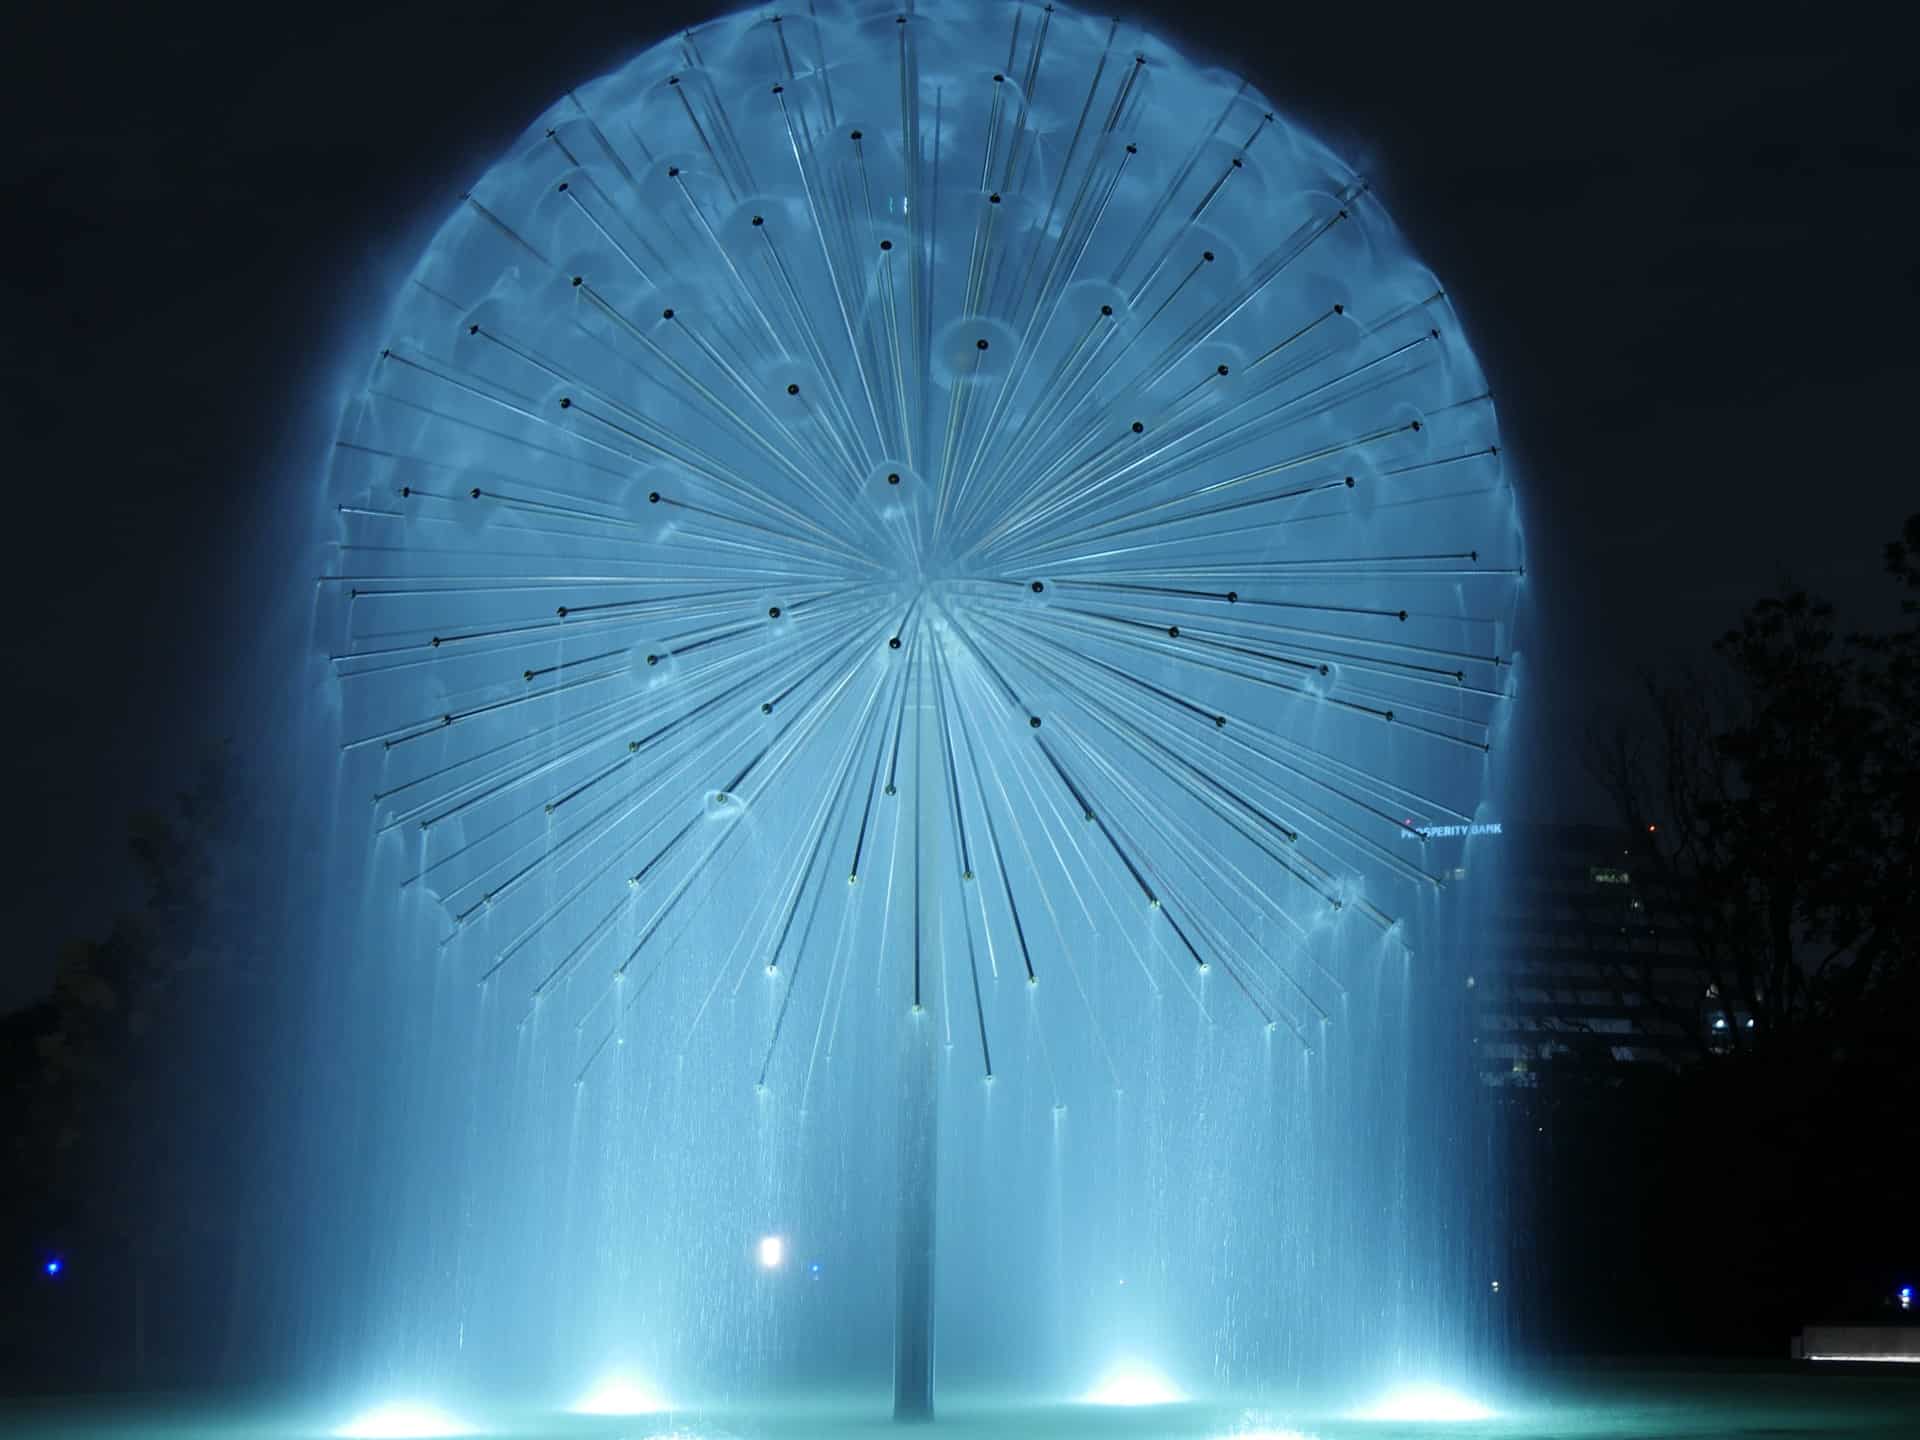 The Dandelion Fountain courtesy of semperfistar on Pixabay